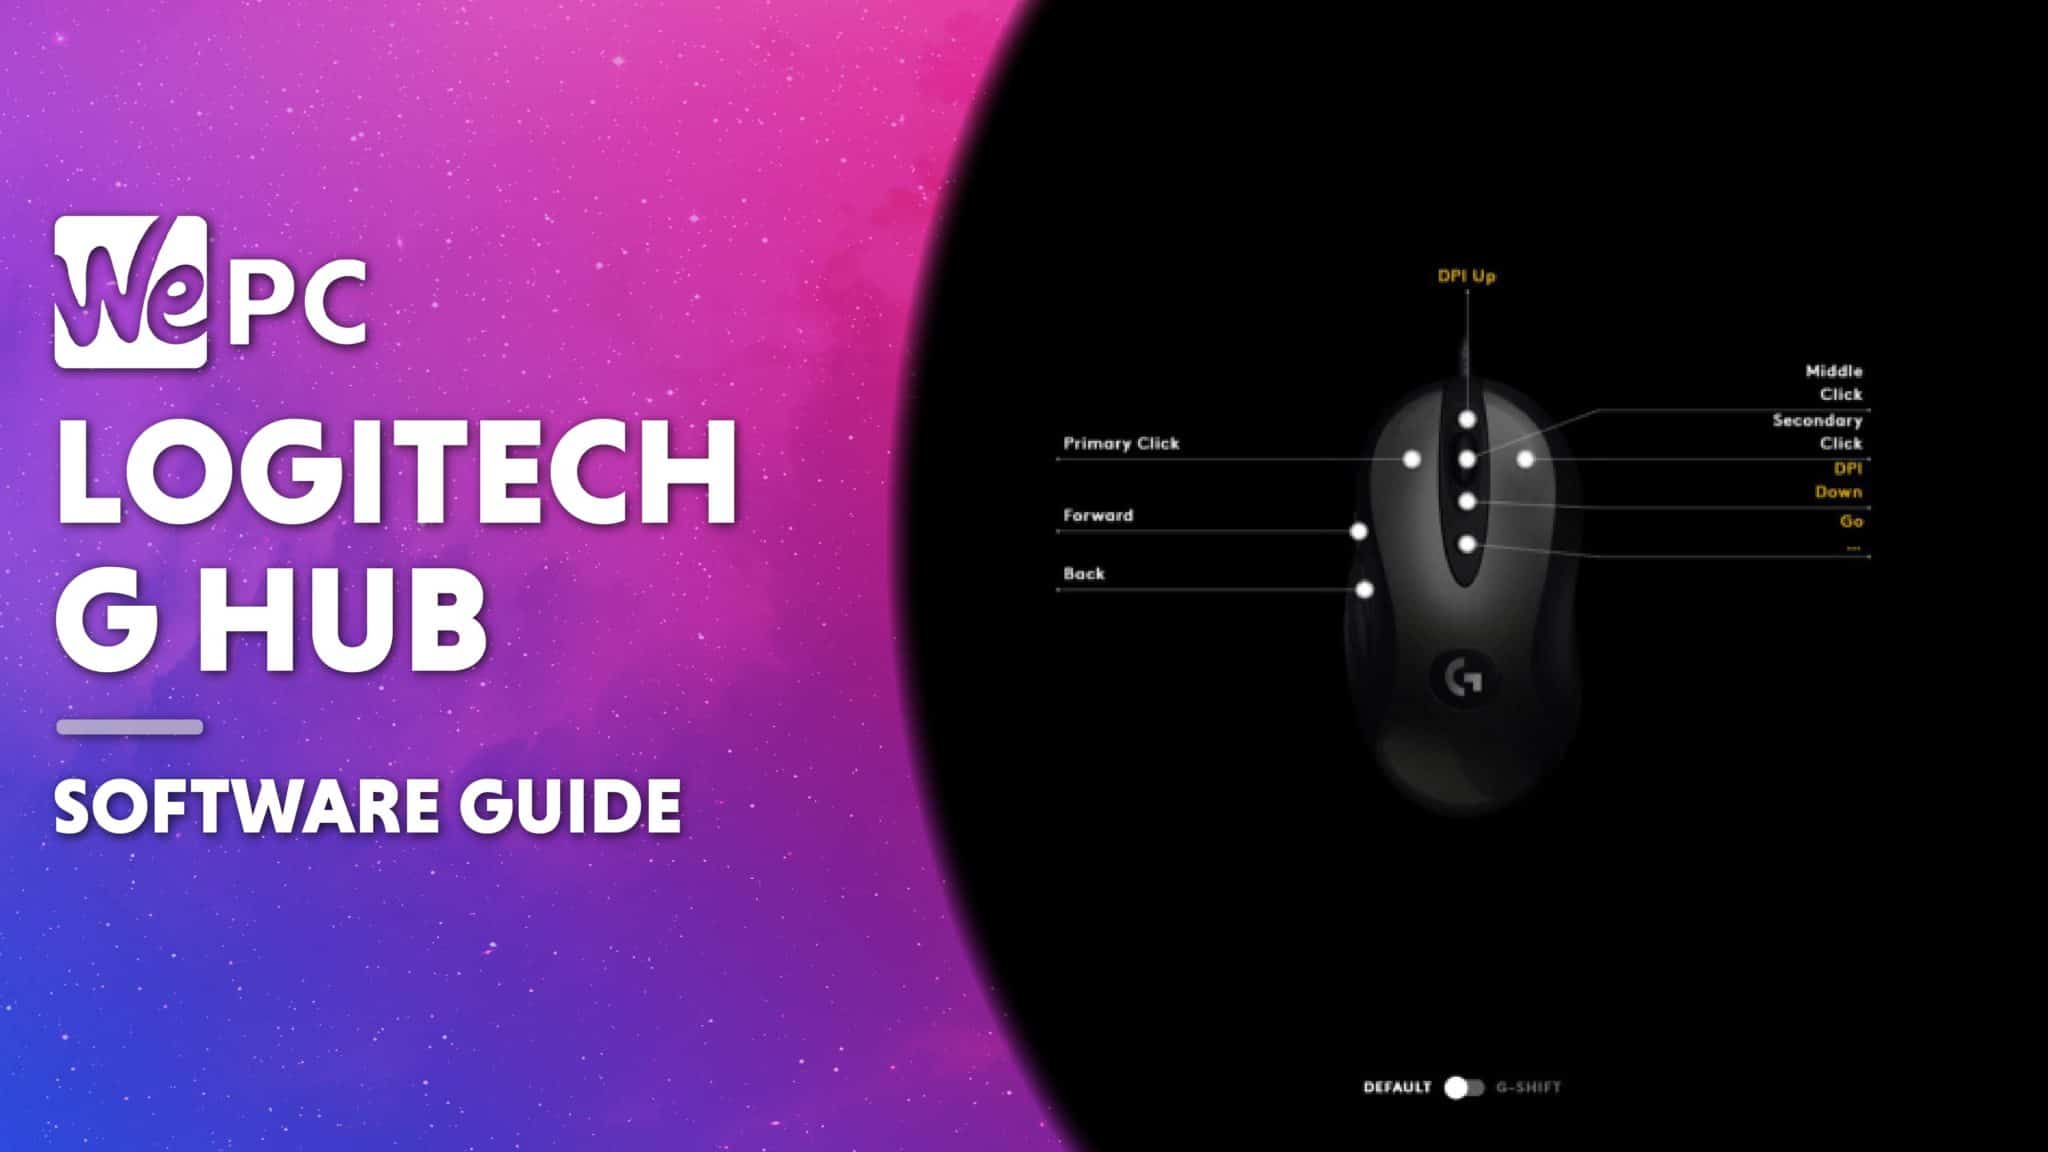 WEPC Logitech G hub software guide 01